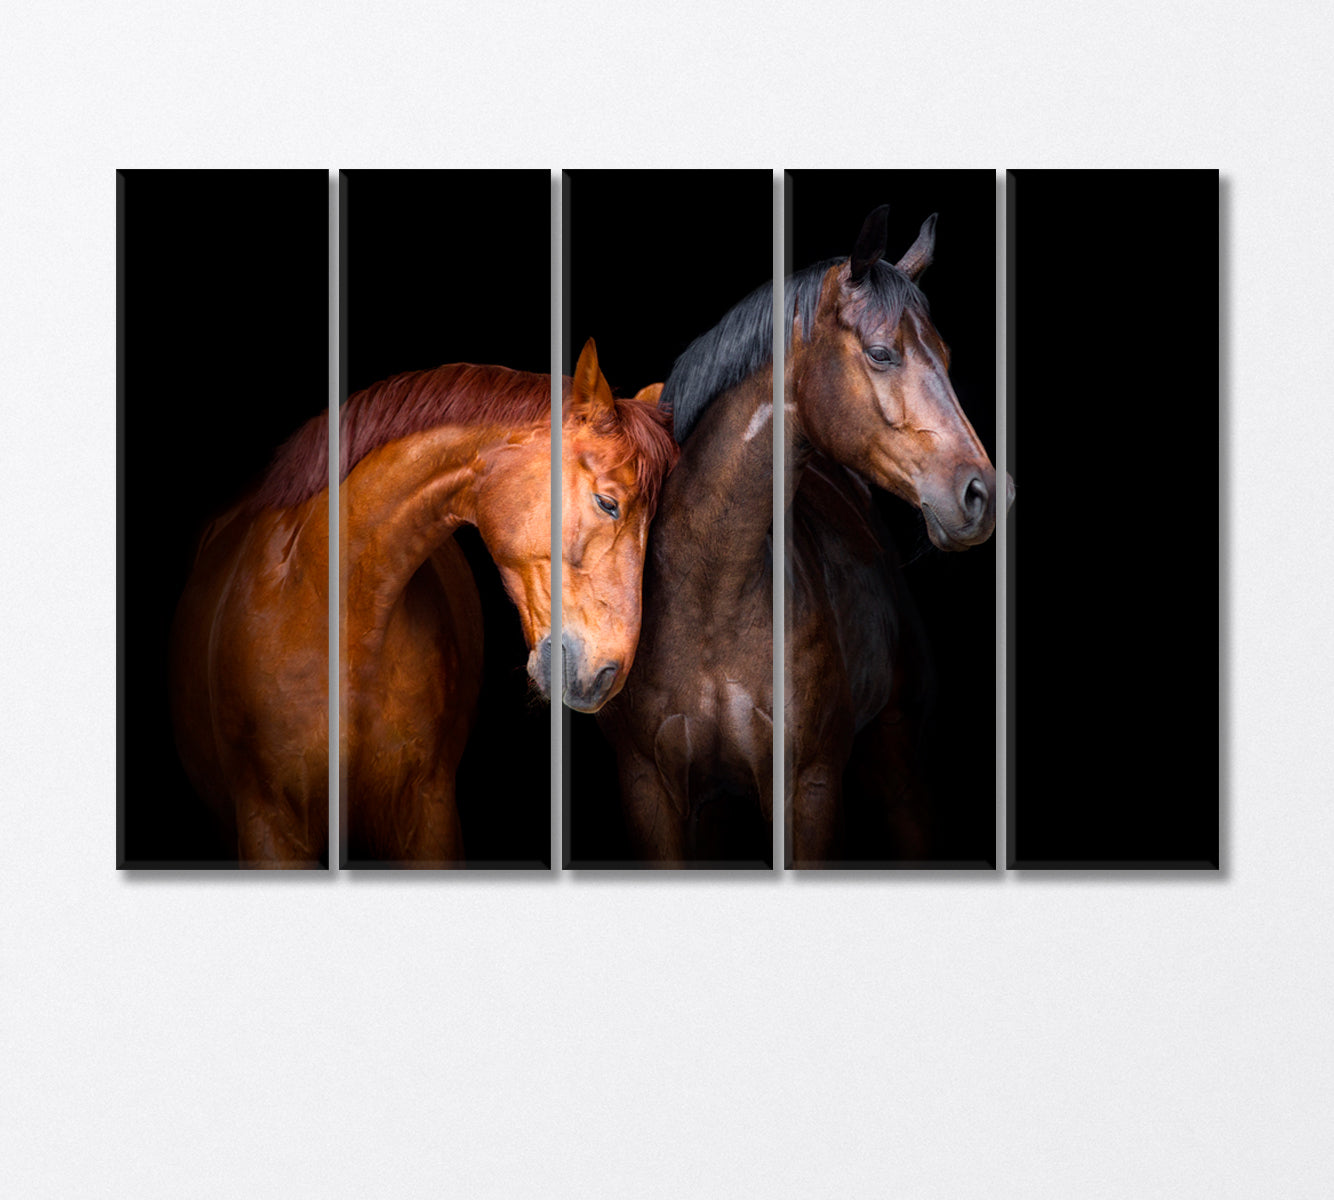 Two Horse Close Up Canvas Print-Canvas Print-CetArt-5 Panels-36x24 inches-CetArt